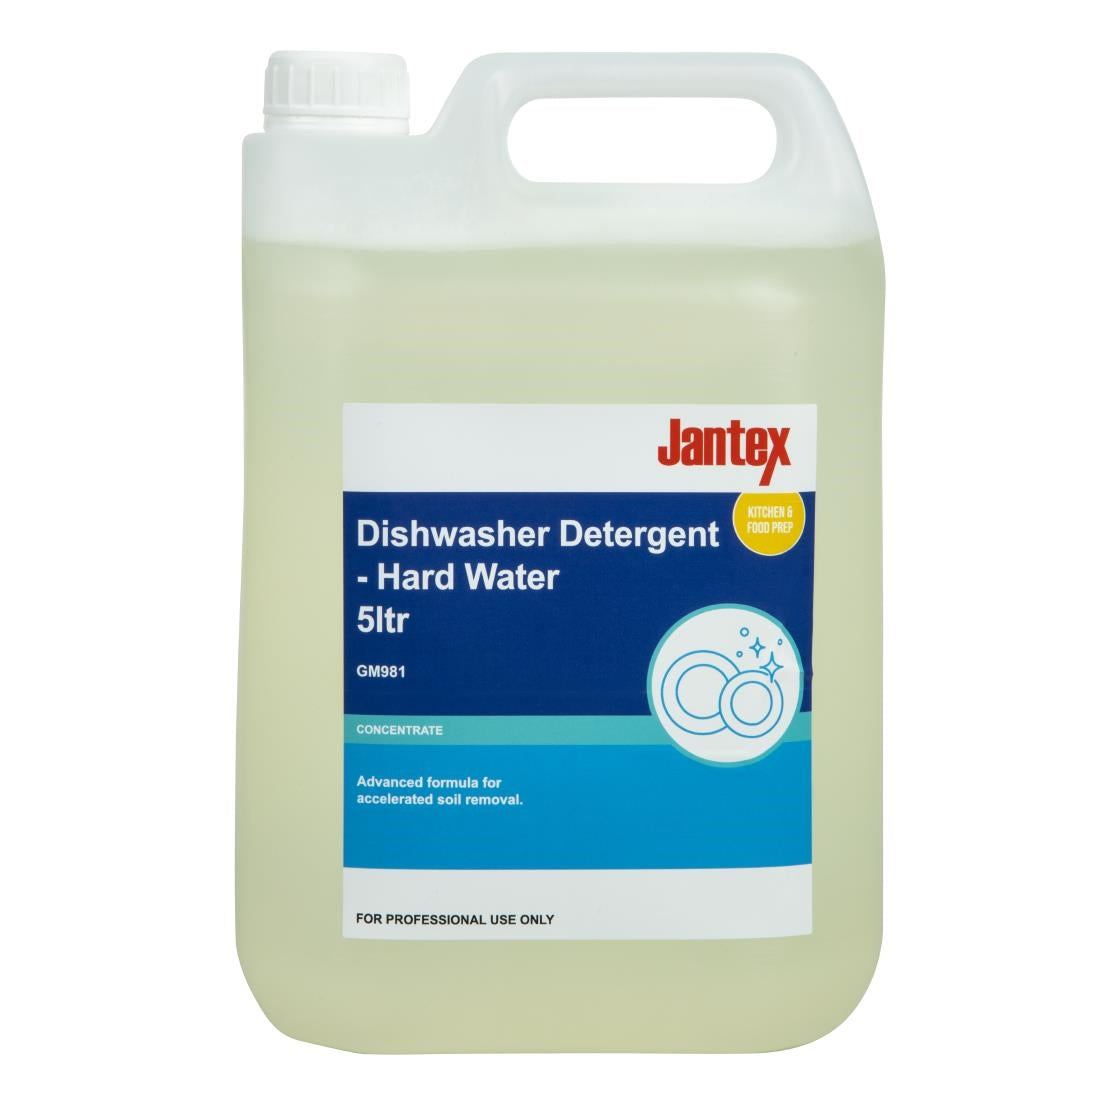 Jantex Pro Dishwasher Detergent Concentrate 5Ltr JD Catering Equipment Solutions Ltd